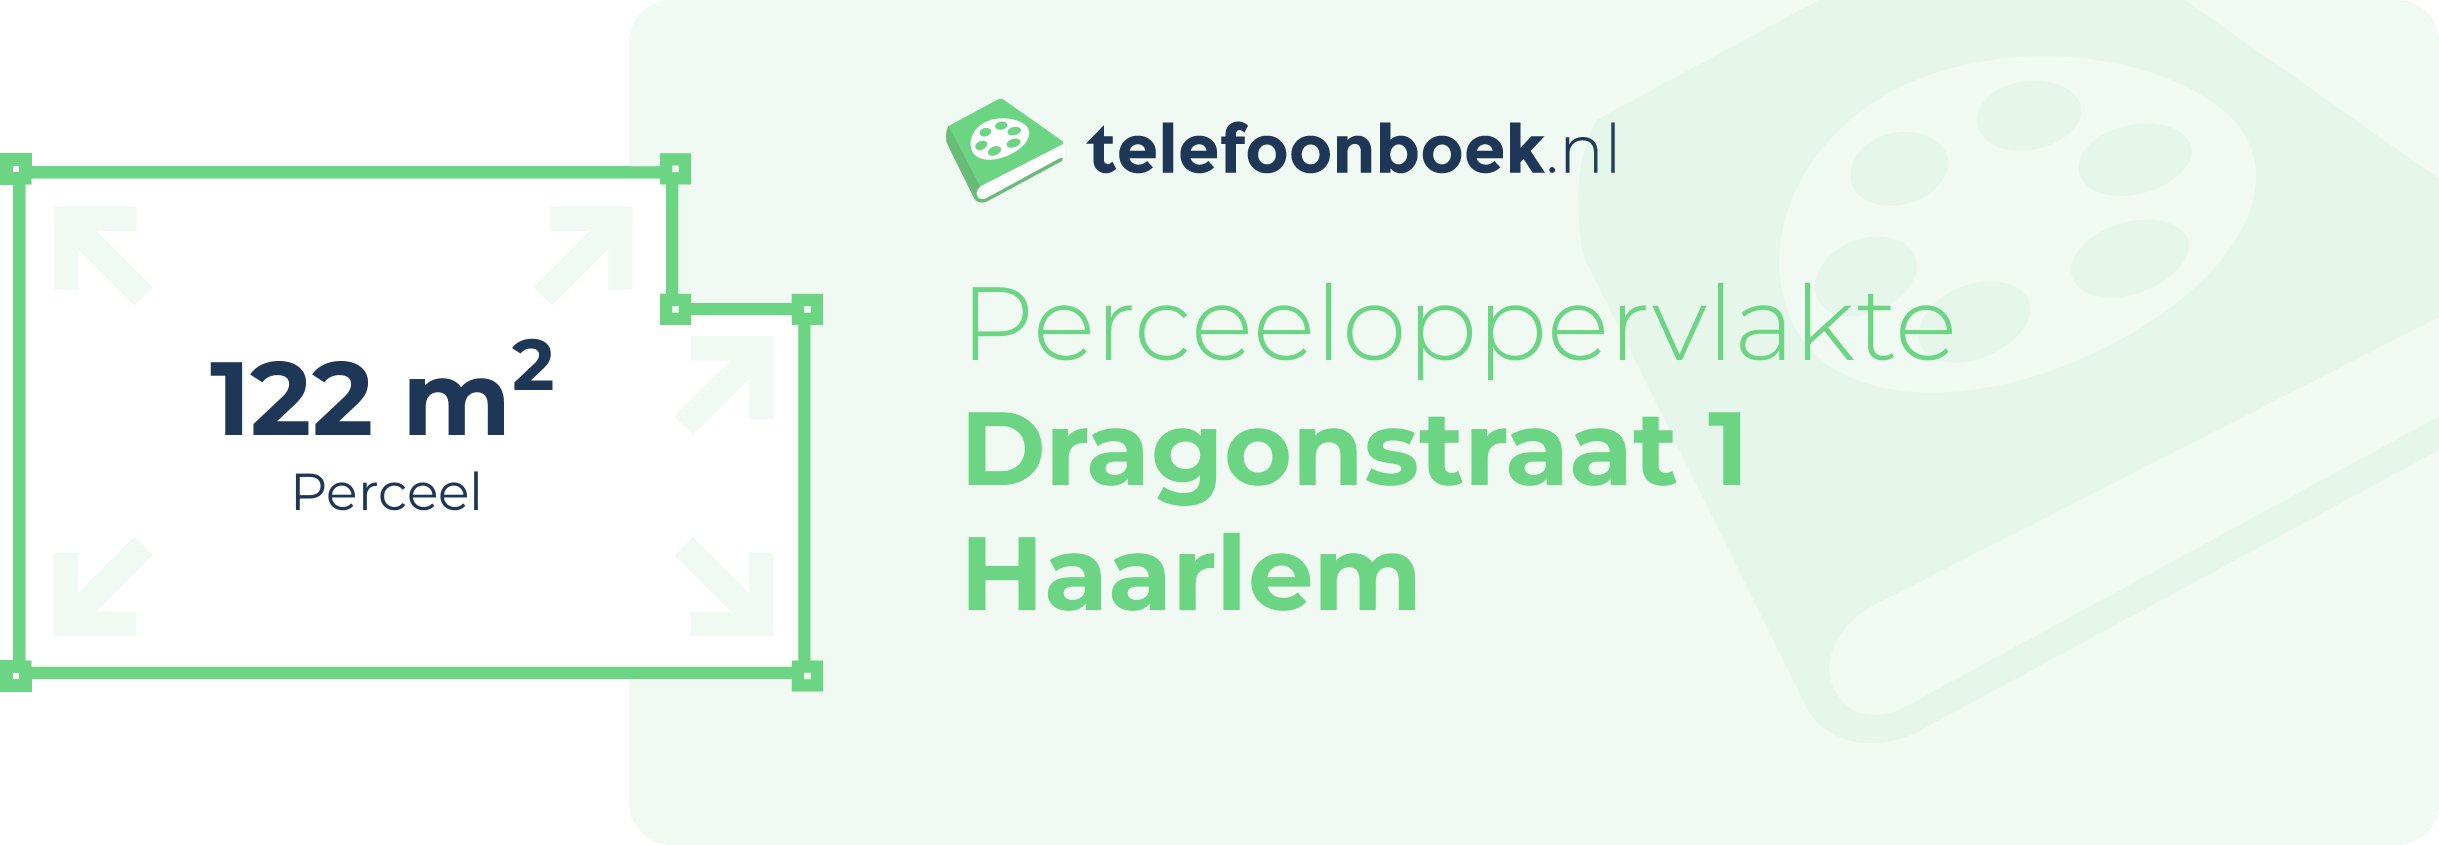 Perceeloppervlakte Dragonstraat 1 Haarlem